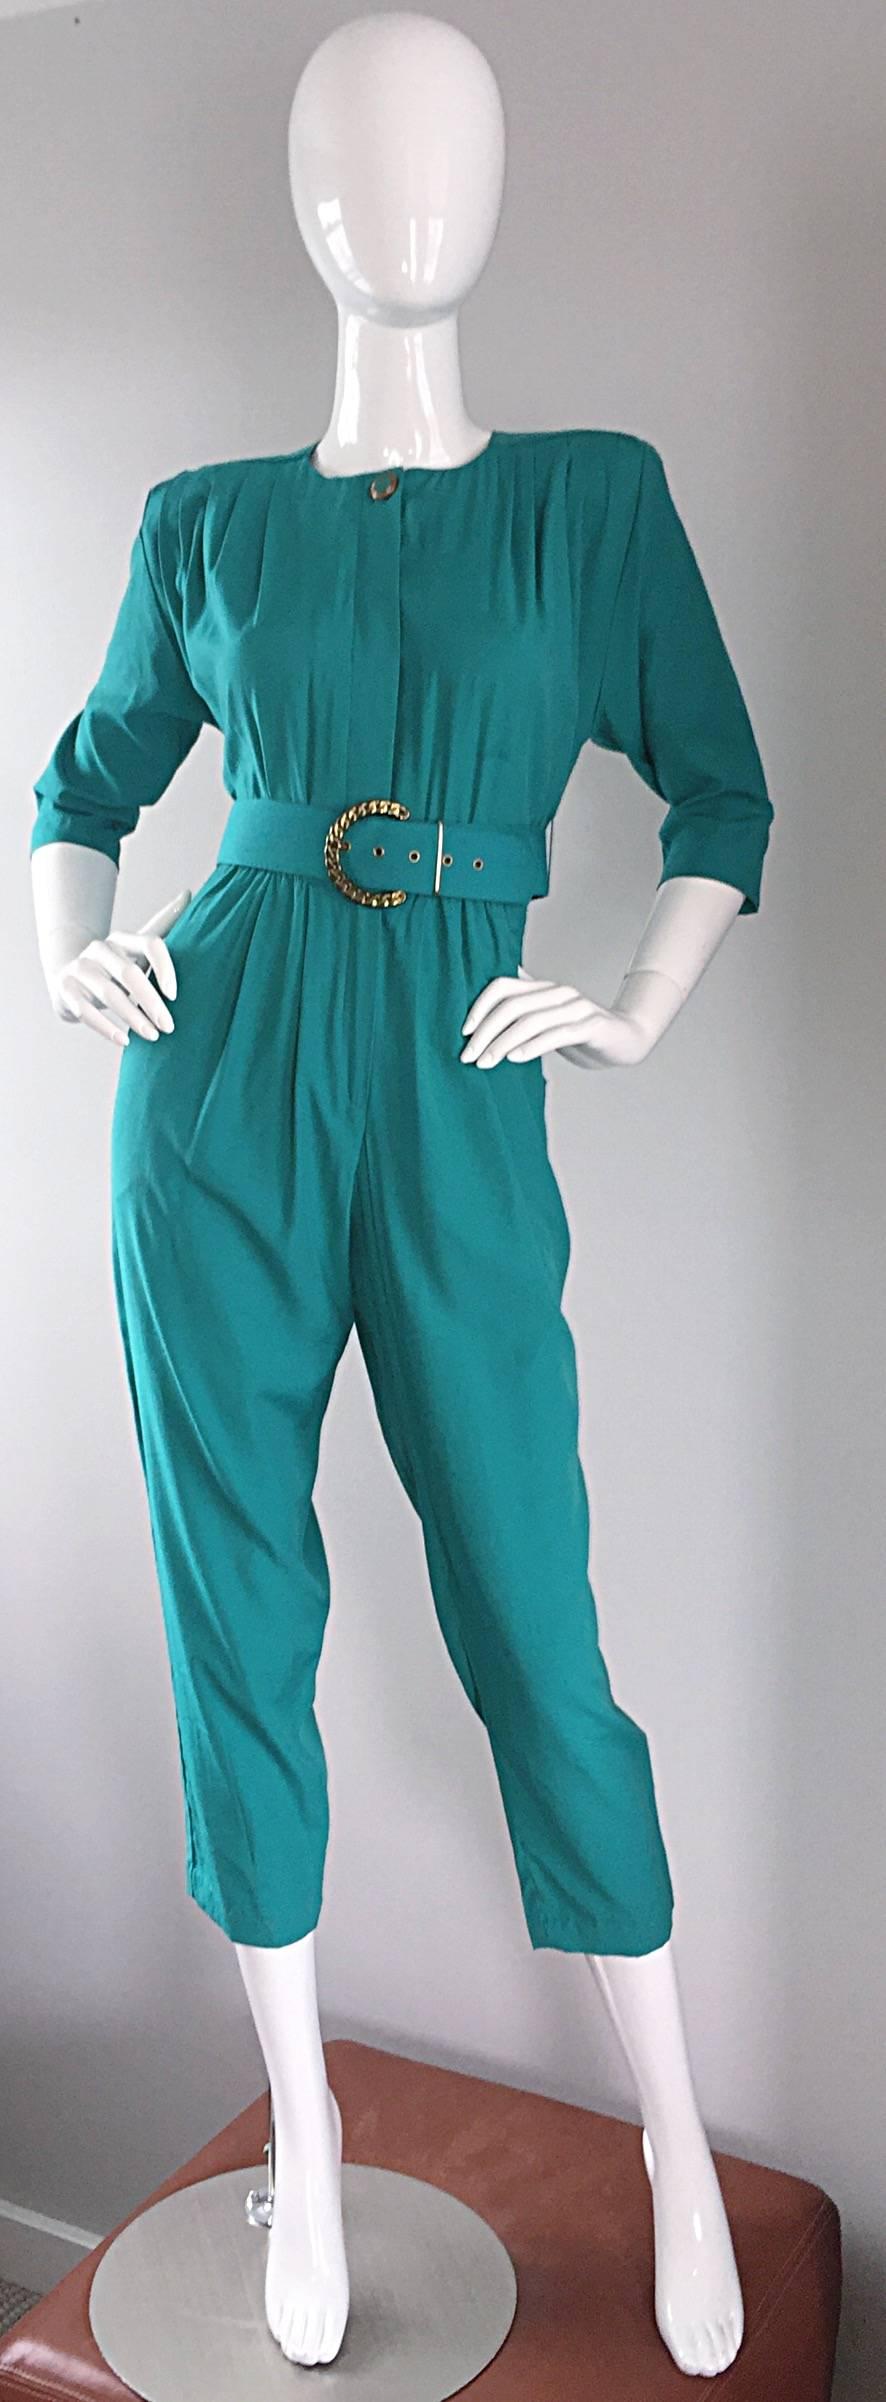 Women's Chic 1980s 80s Teal Green Vintage Jumpsuit Romper Onesie w/ Belt 